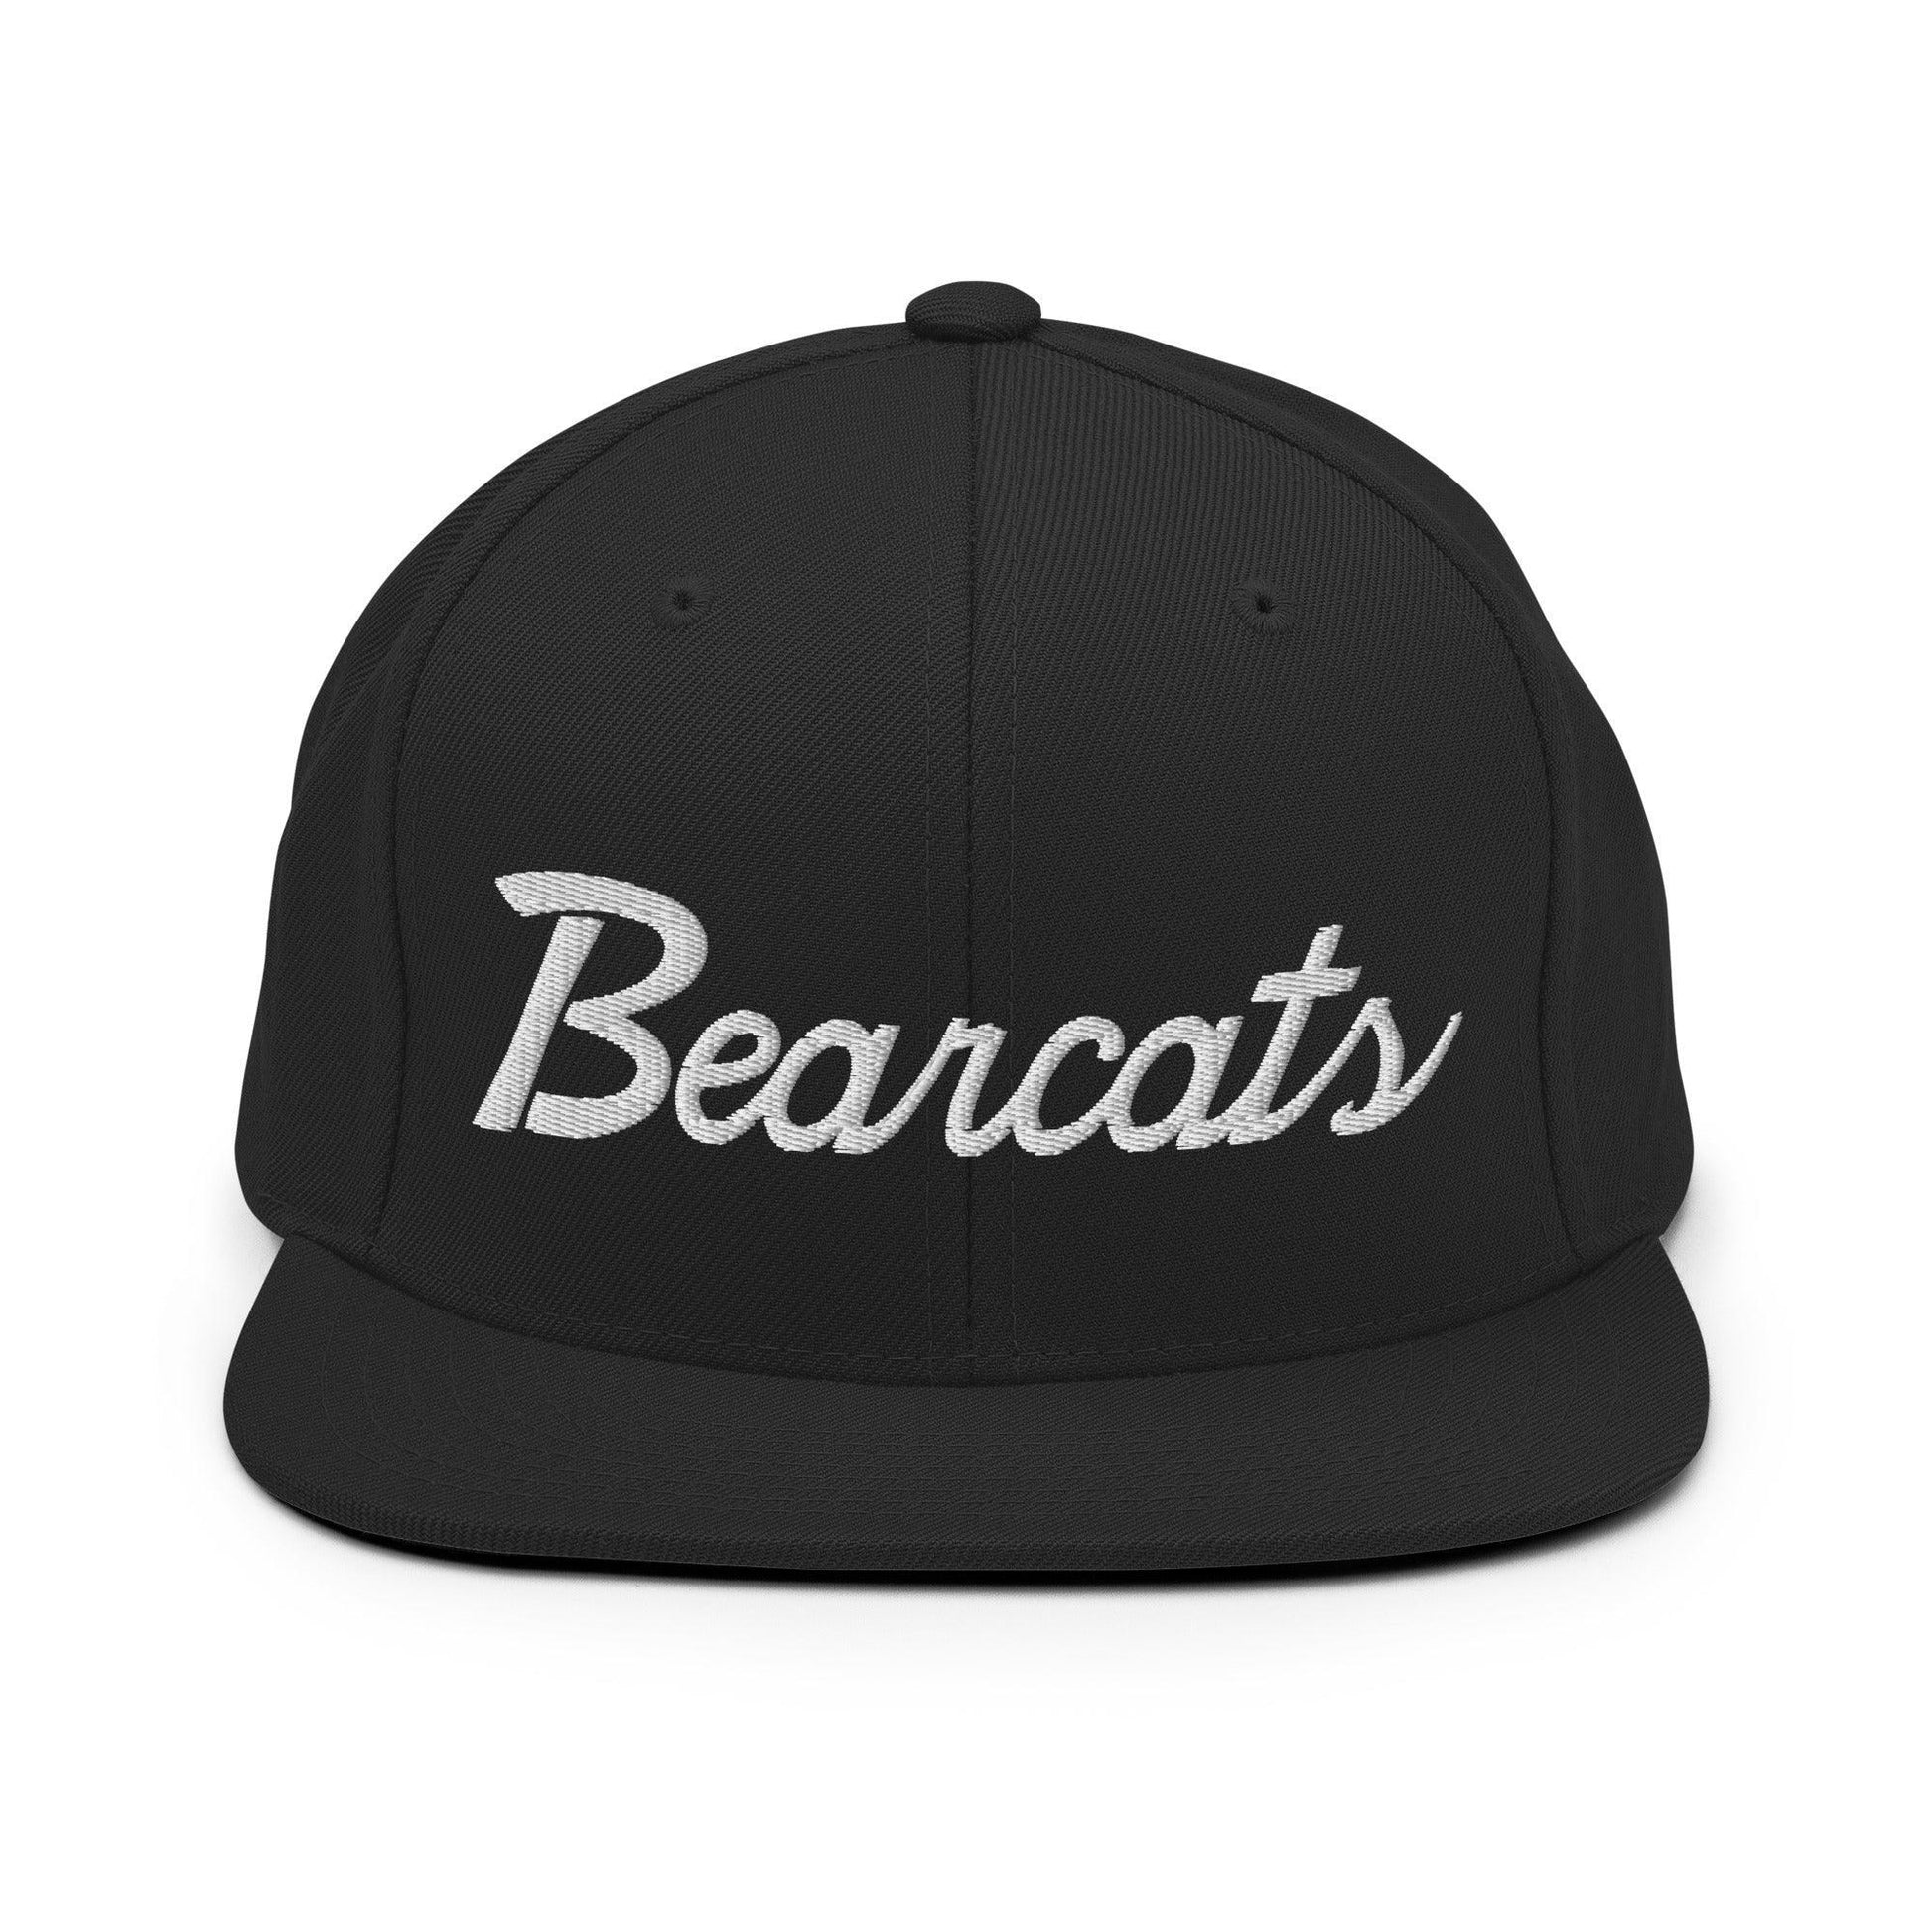 Bearcats School Mascot Script Snapback Hat Black